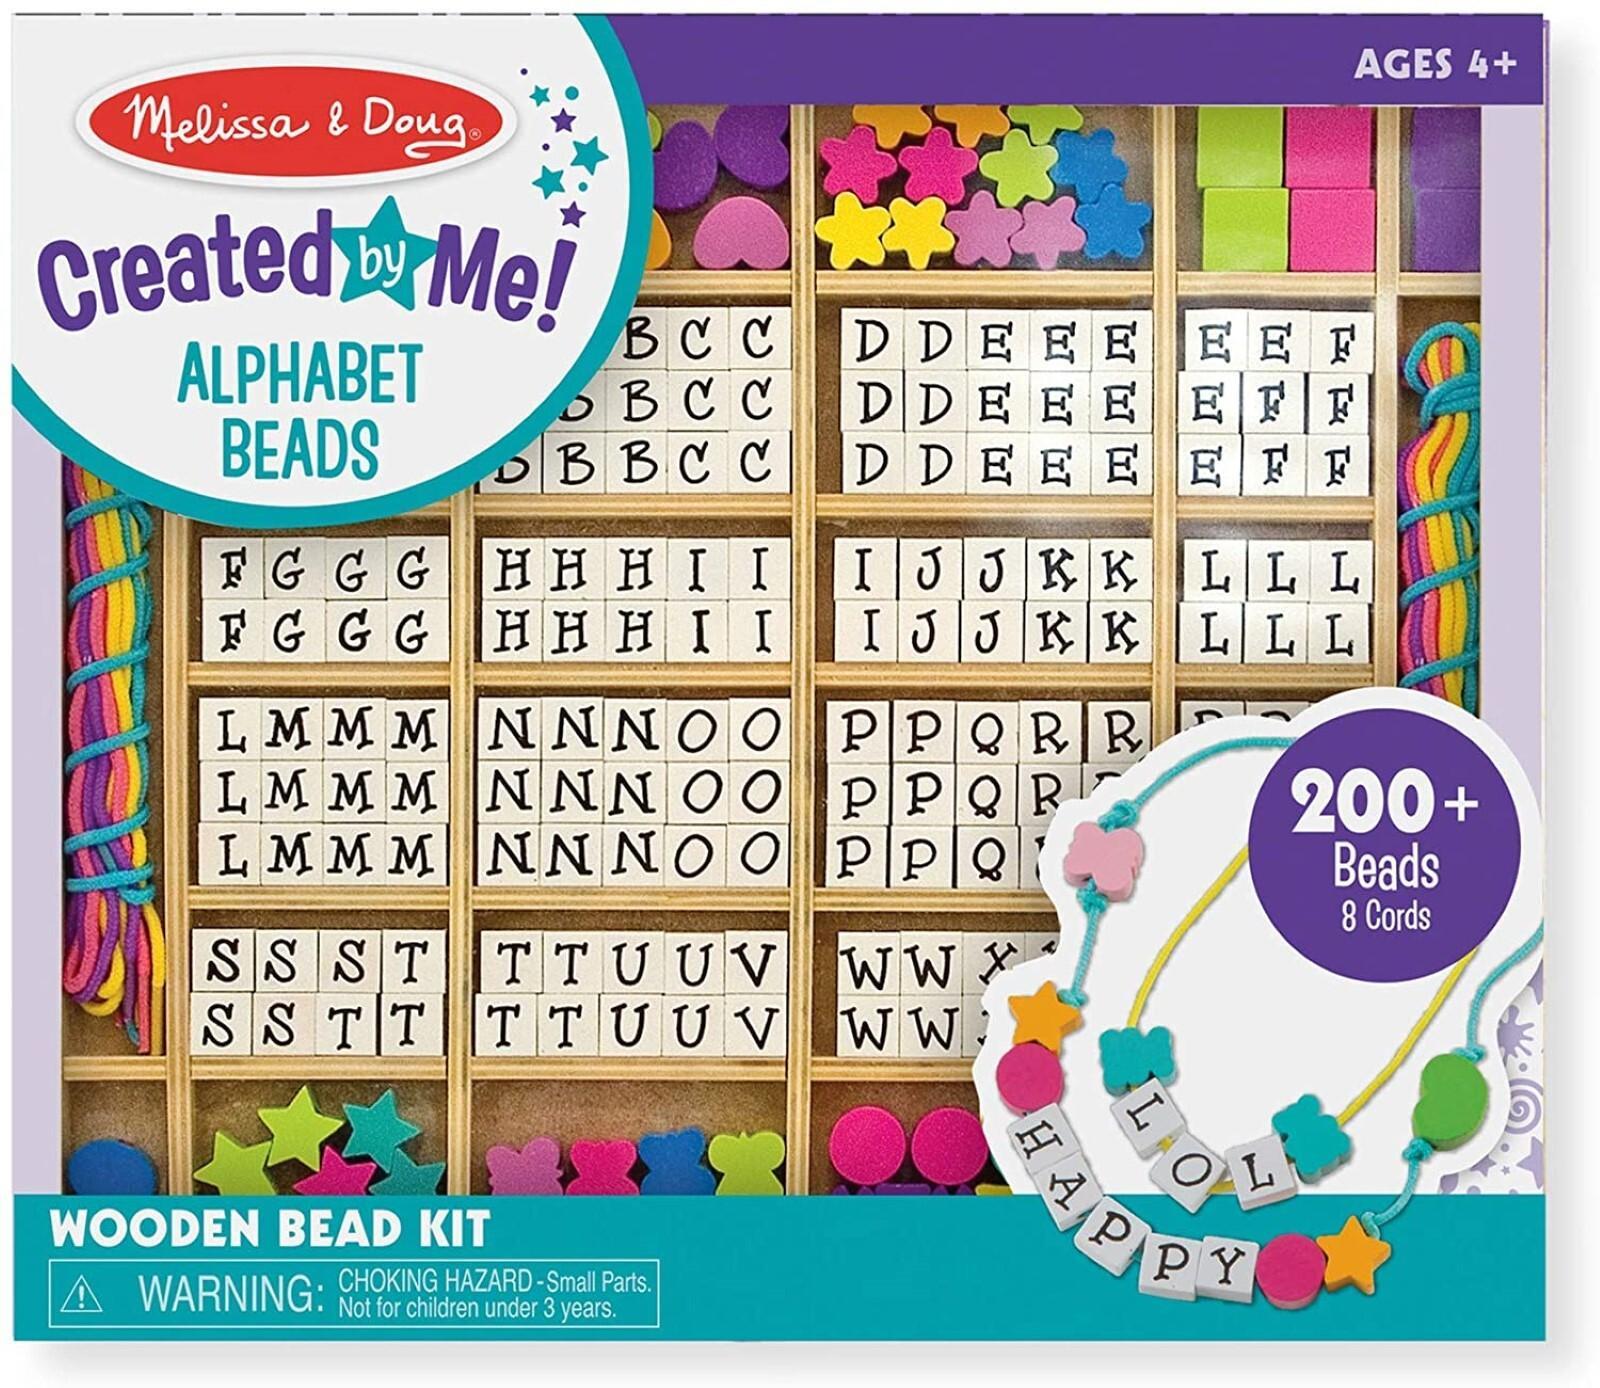 Melissa & Doug Beads Wooden Alphabet Stringing Bead Kit